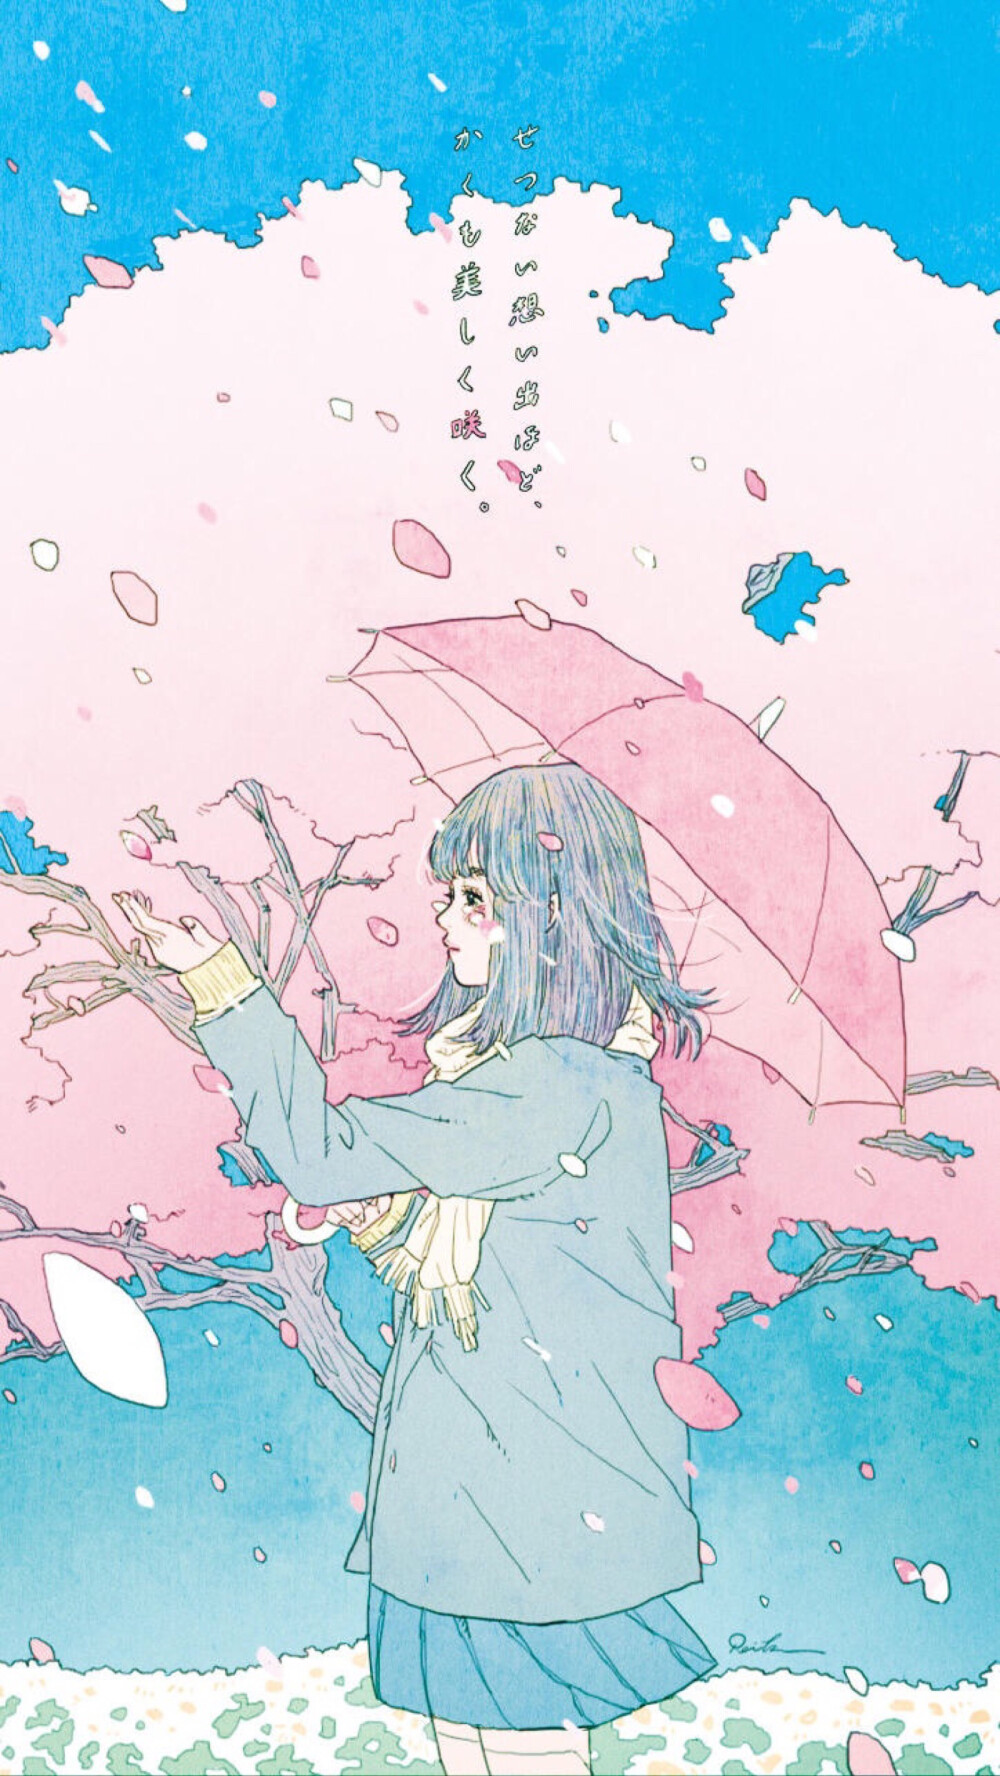 Kato Rei 在 instagram 的自我介绍只有两句：日本插画师、来自「罗曼蒂克」（其实是来自东京），而 TA 在官方网站上的介绍则是「绘画浪漫世界观的插画家」。Kato Rei 所表现的画面好像是在随手拍摄女孩们的生活瞬间，湛蓝的天空、淡粉色的落花、恋人肌肤的触感、冬日围巾里的暖意——给这些生活里这些再普通不过的小细节们涂上幻想的色彩，不正是「罗曼蒂克」的真谛？